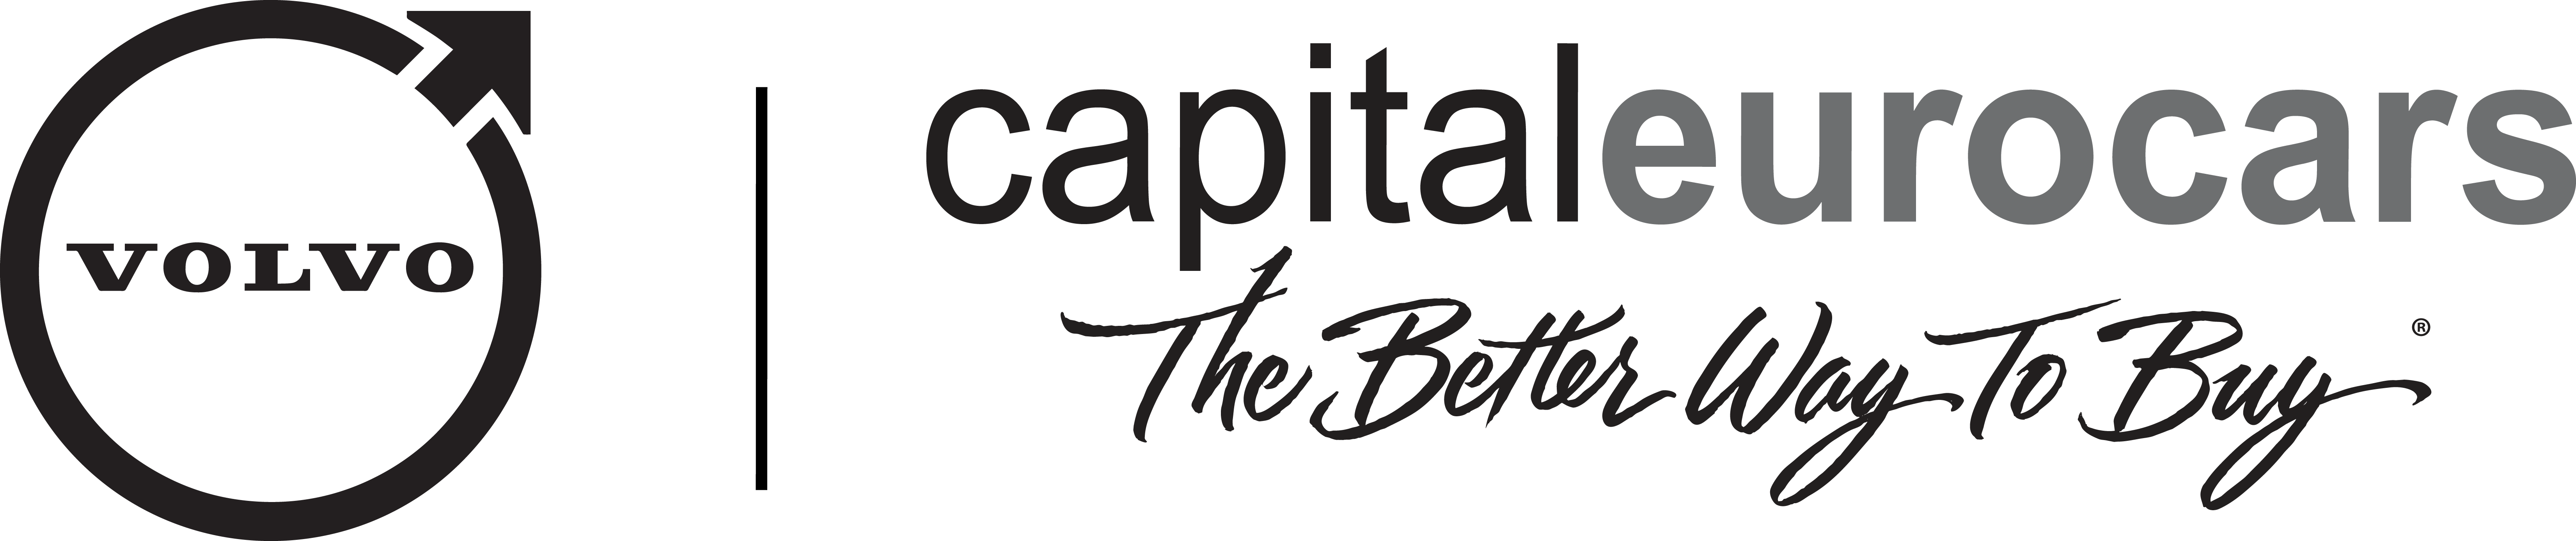 Capital Volvo Cars logo